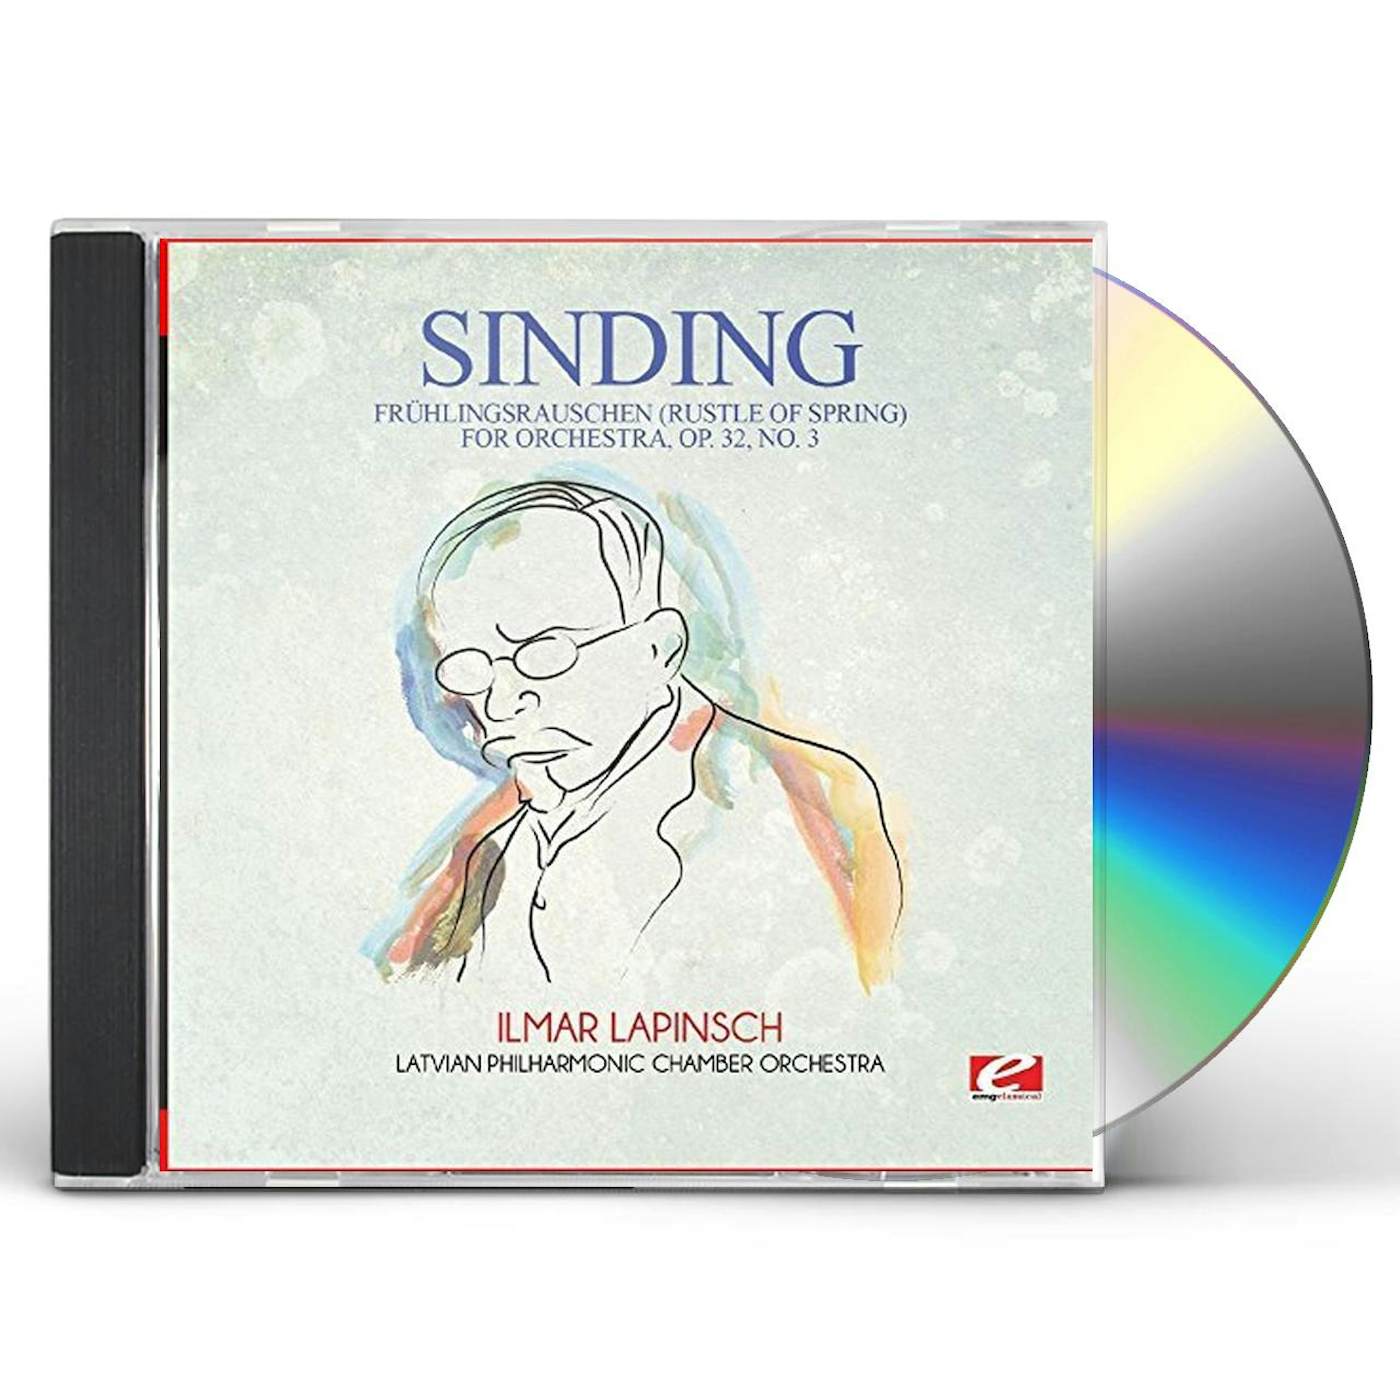 Sinding FRUHLINGSRAUSCHEN (RUSTLE OF SPRING) FOR ORCHESTRA CD